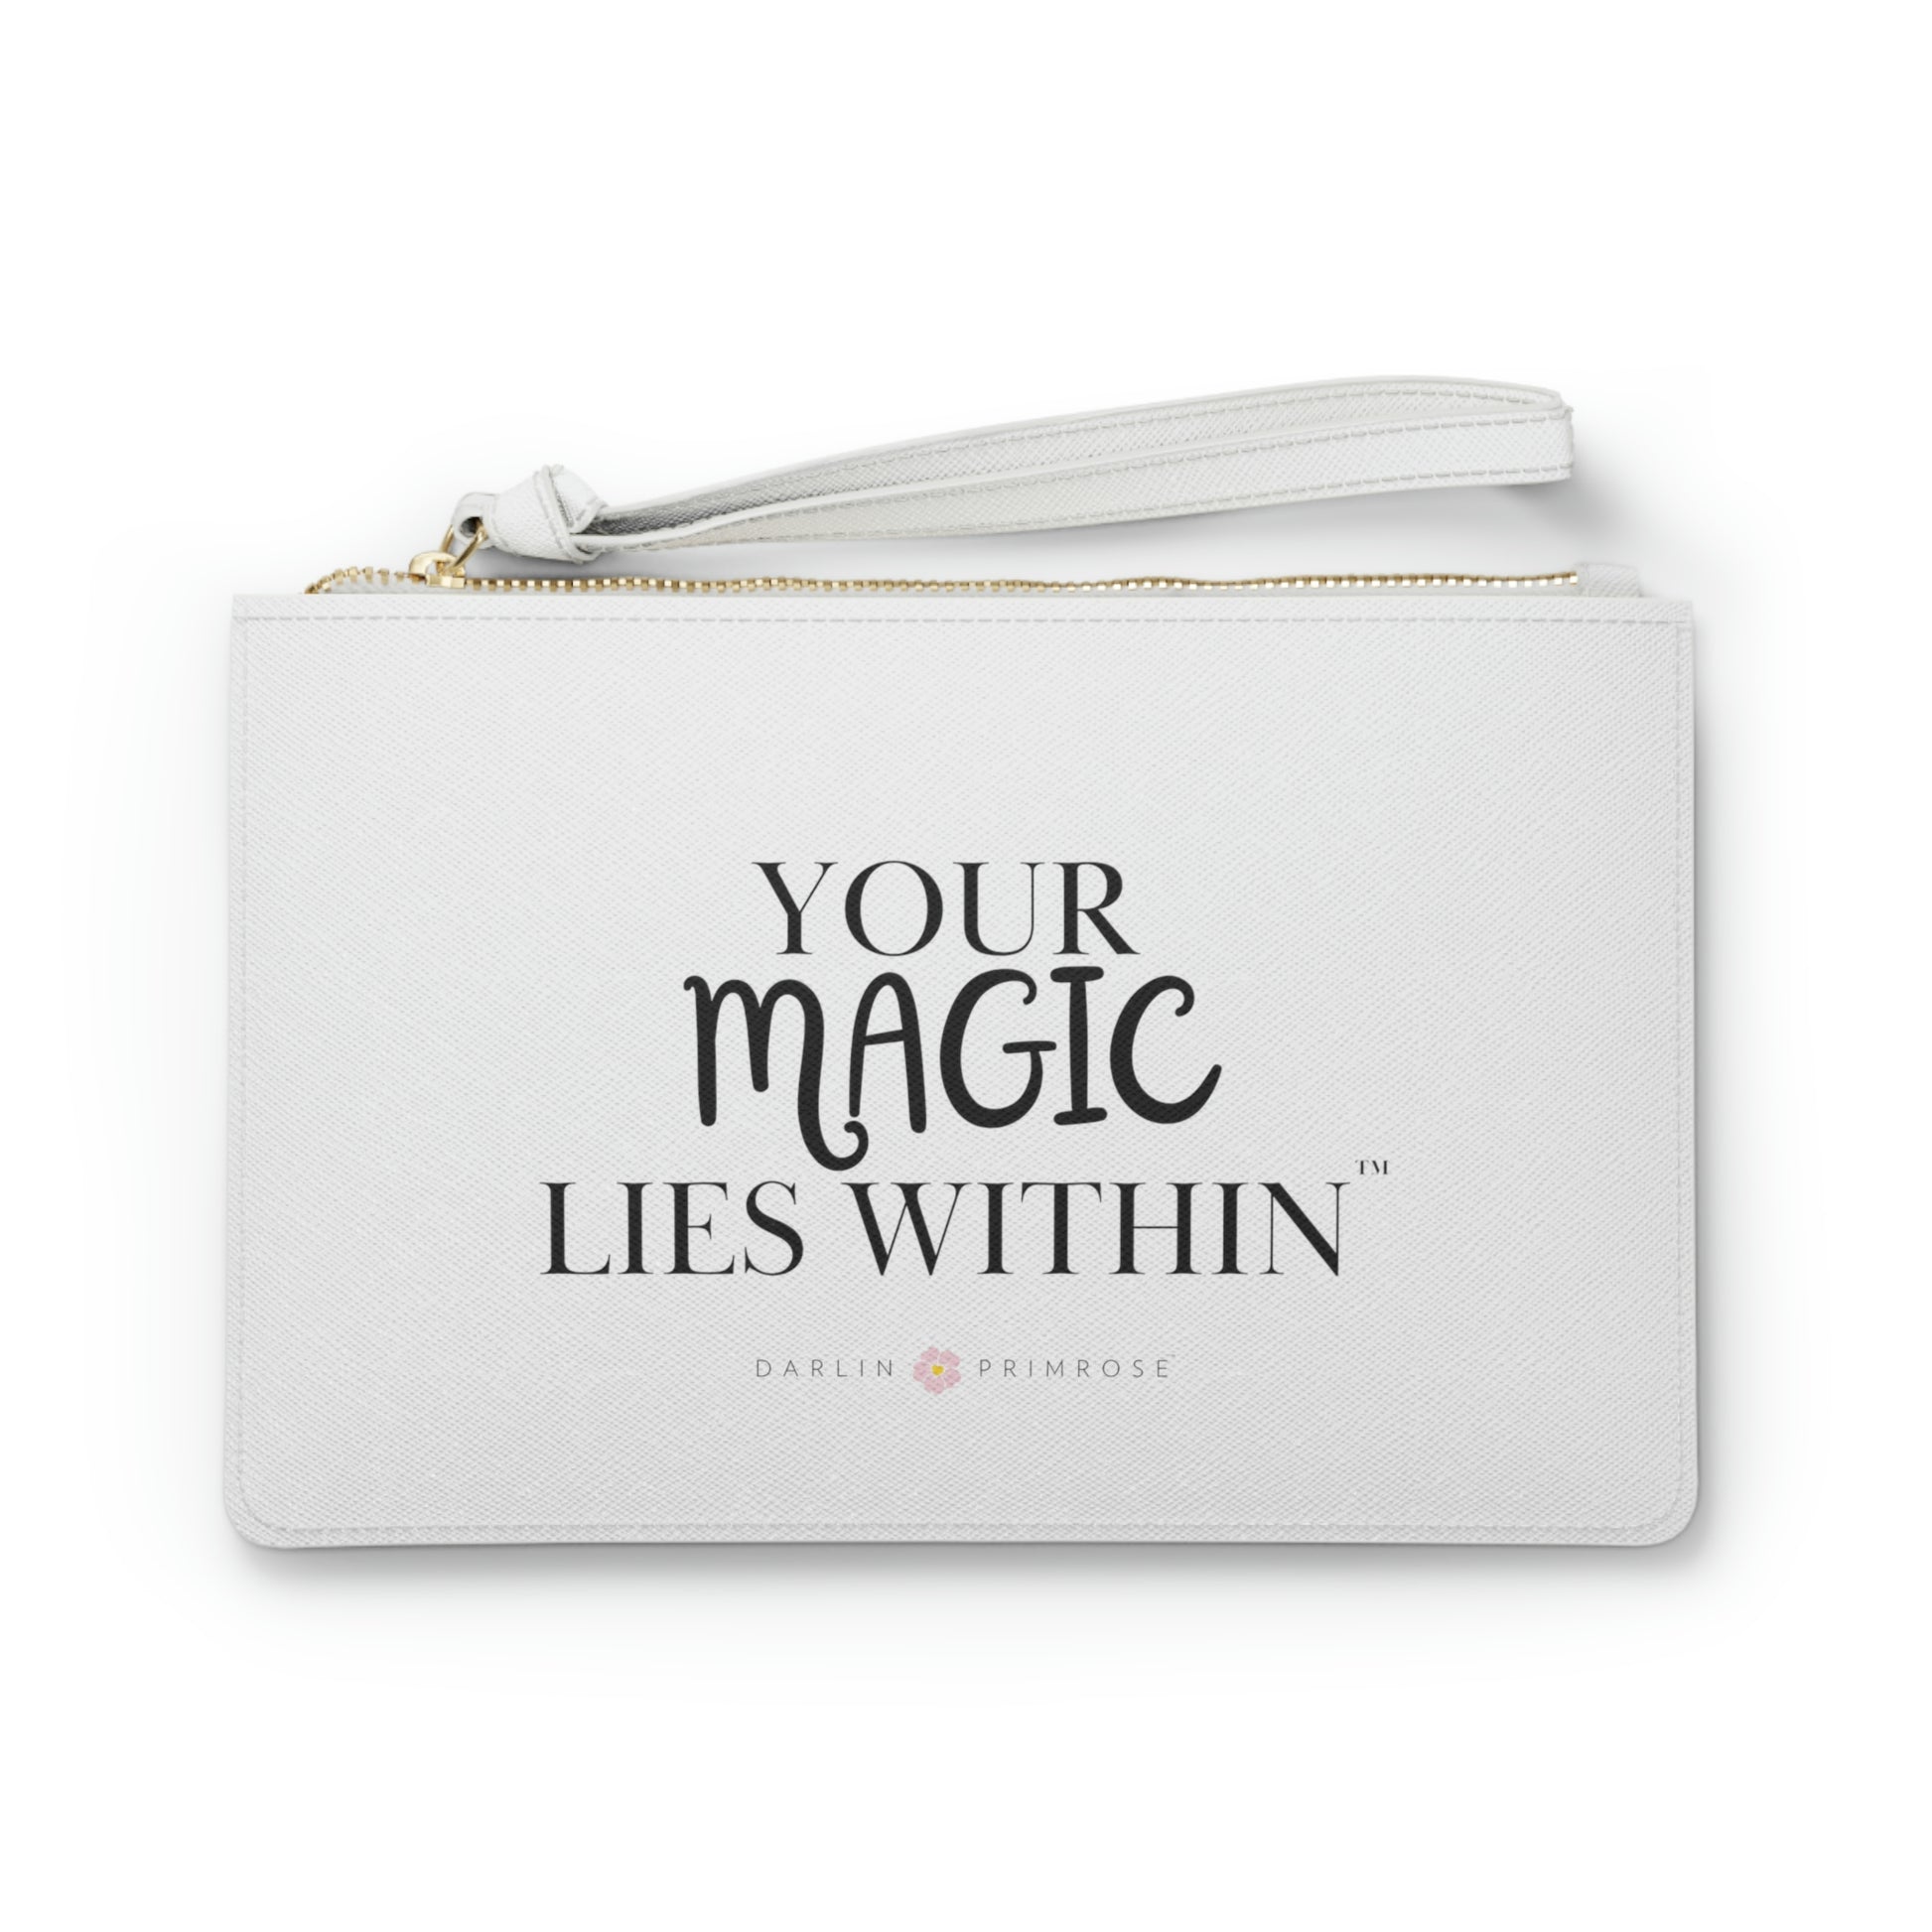 Your MAGIC lies within ™️ -Clutch Bag - Darlin Primrose